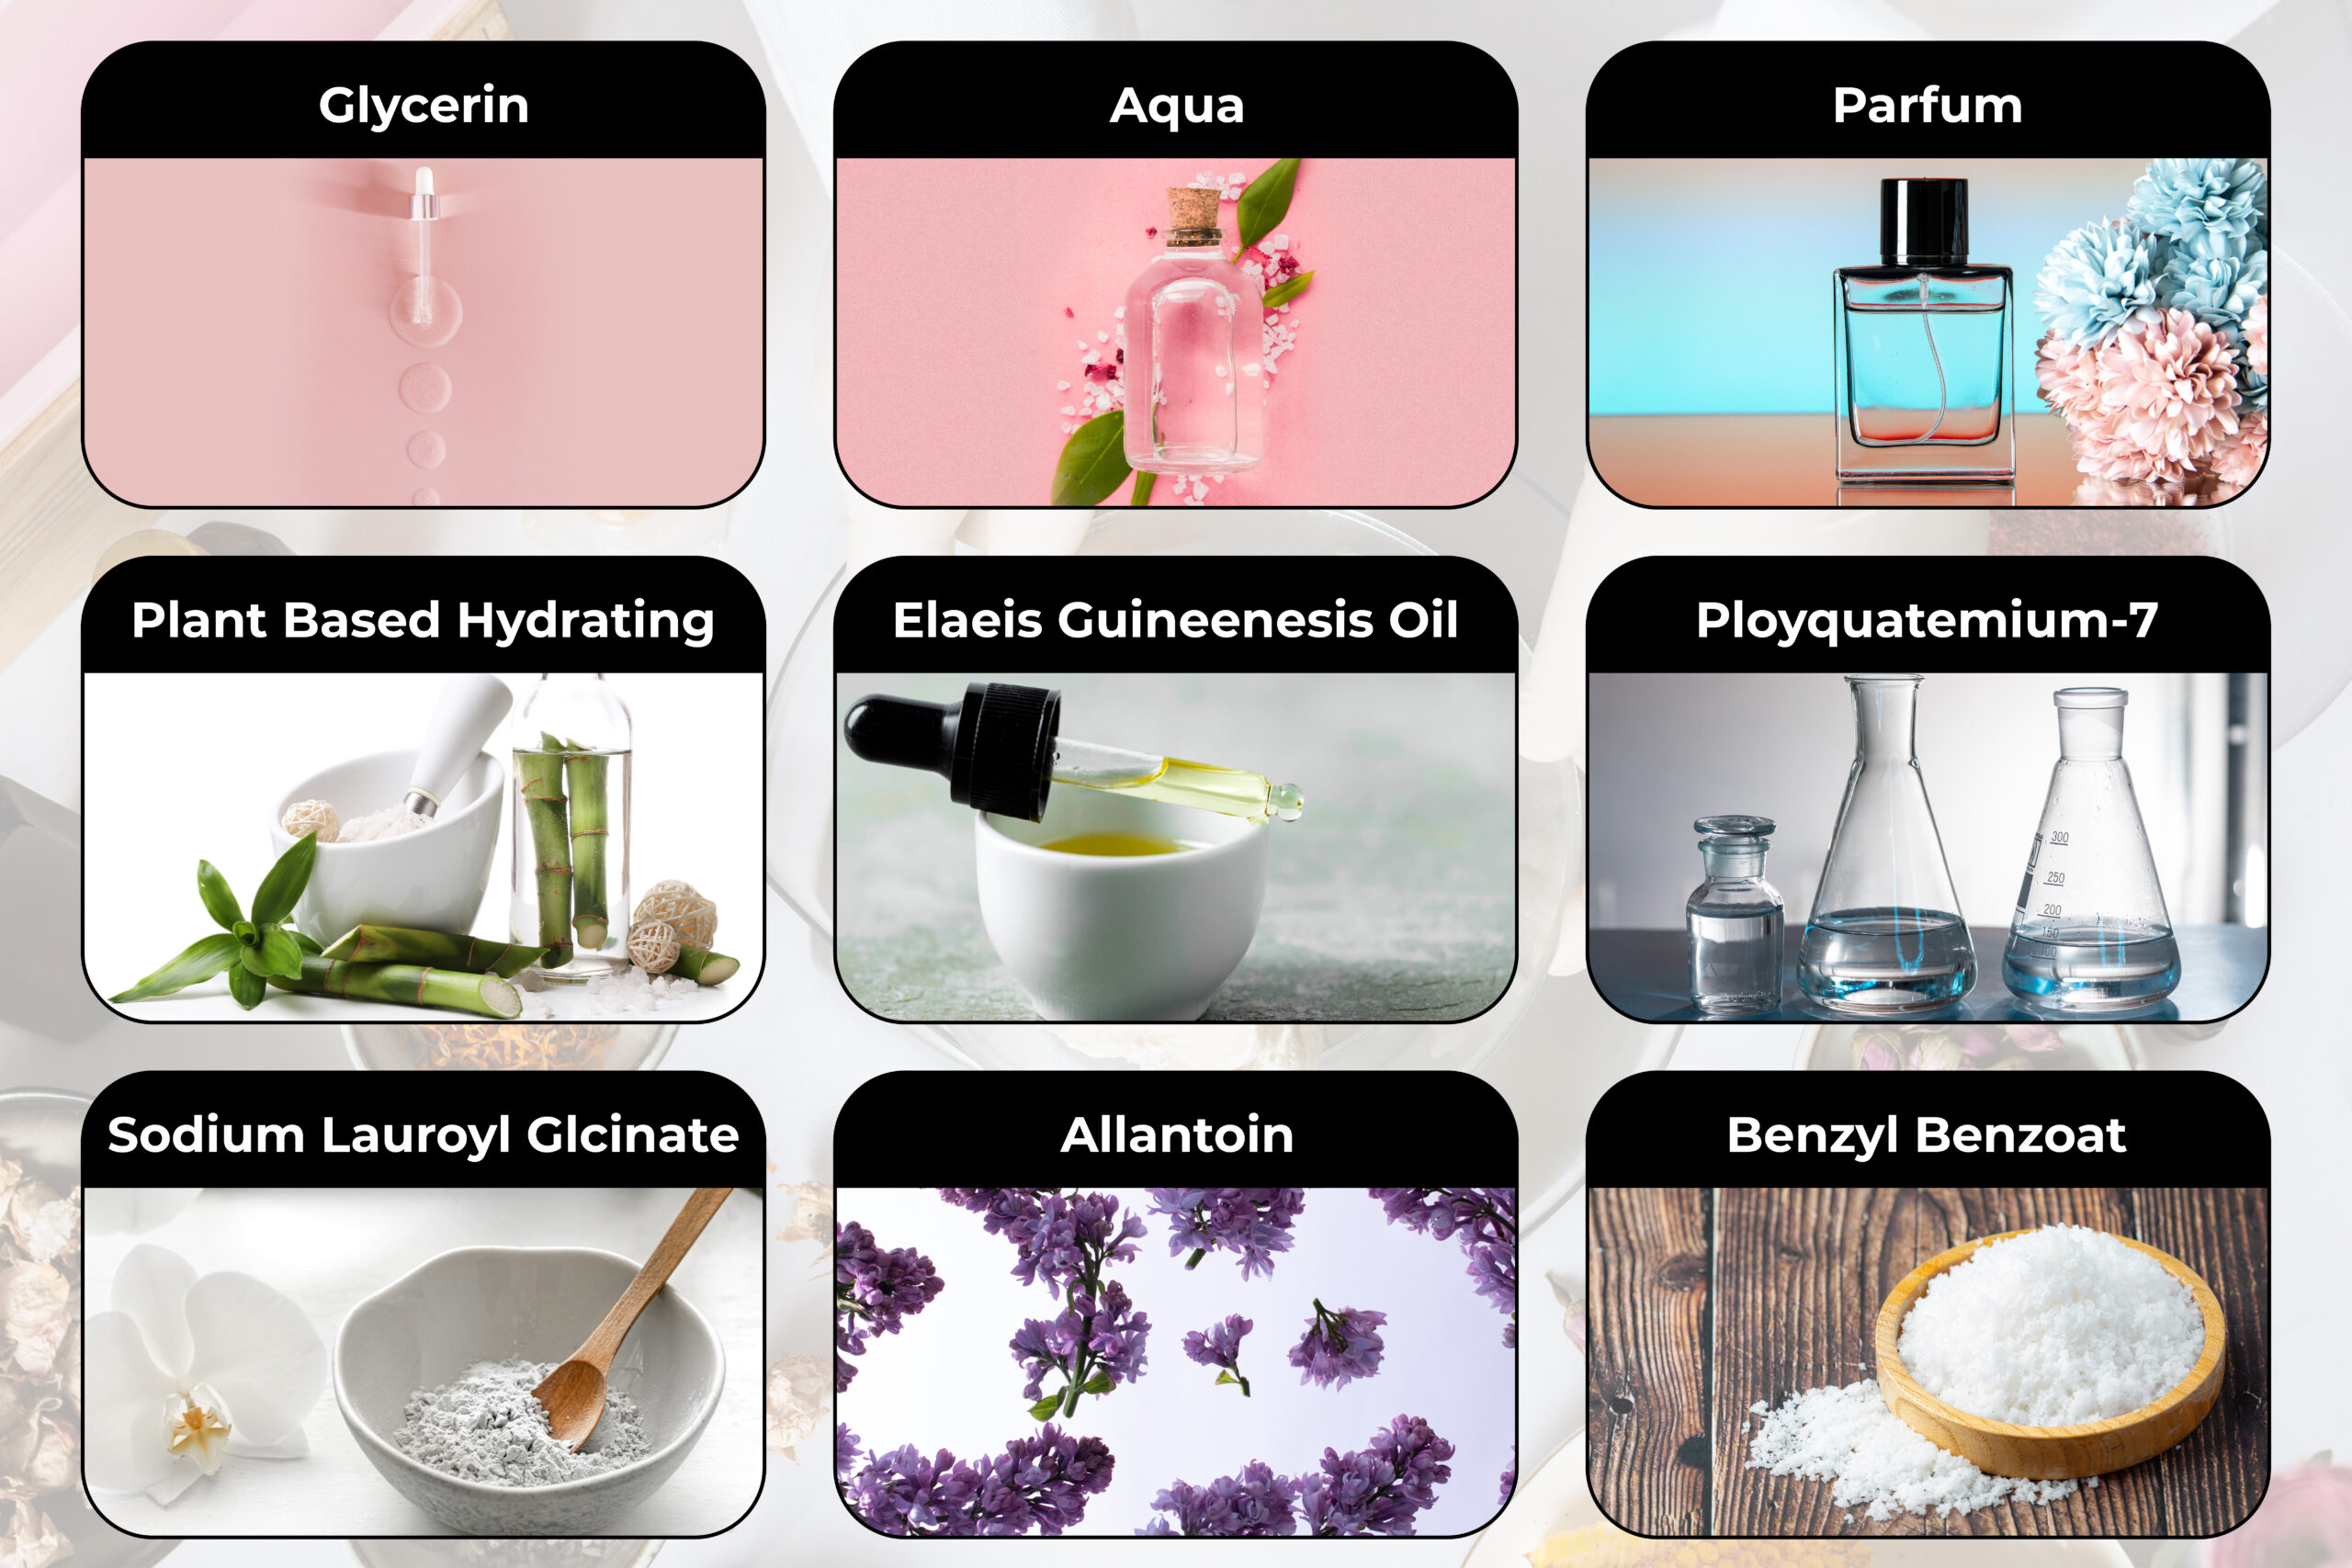 Ingredients: Glycerin, Aqua, Parfum, Plant Based Hydrating,Sodium Lauroyl Glcinate, Elaeis Guineenesis Oil, Ployquatemium-7, Allantoin, Benzyl Benzoat